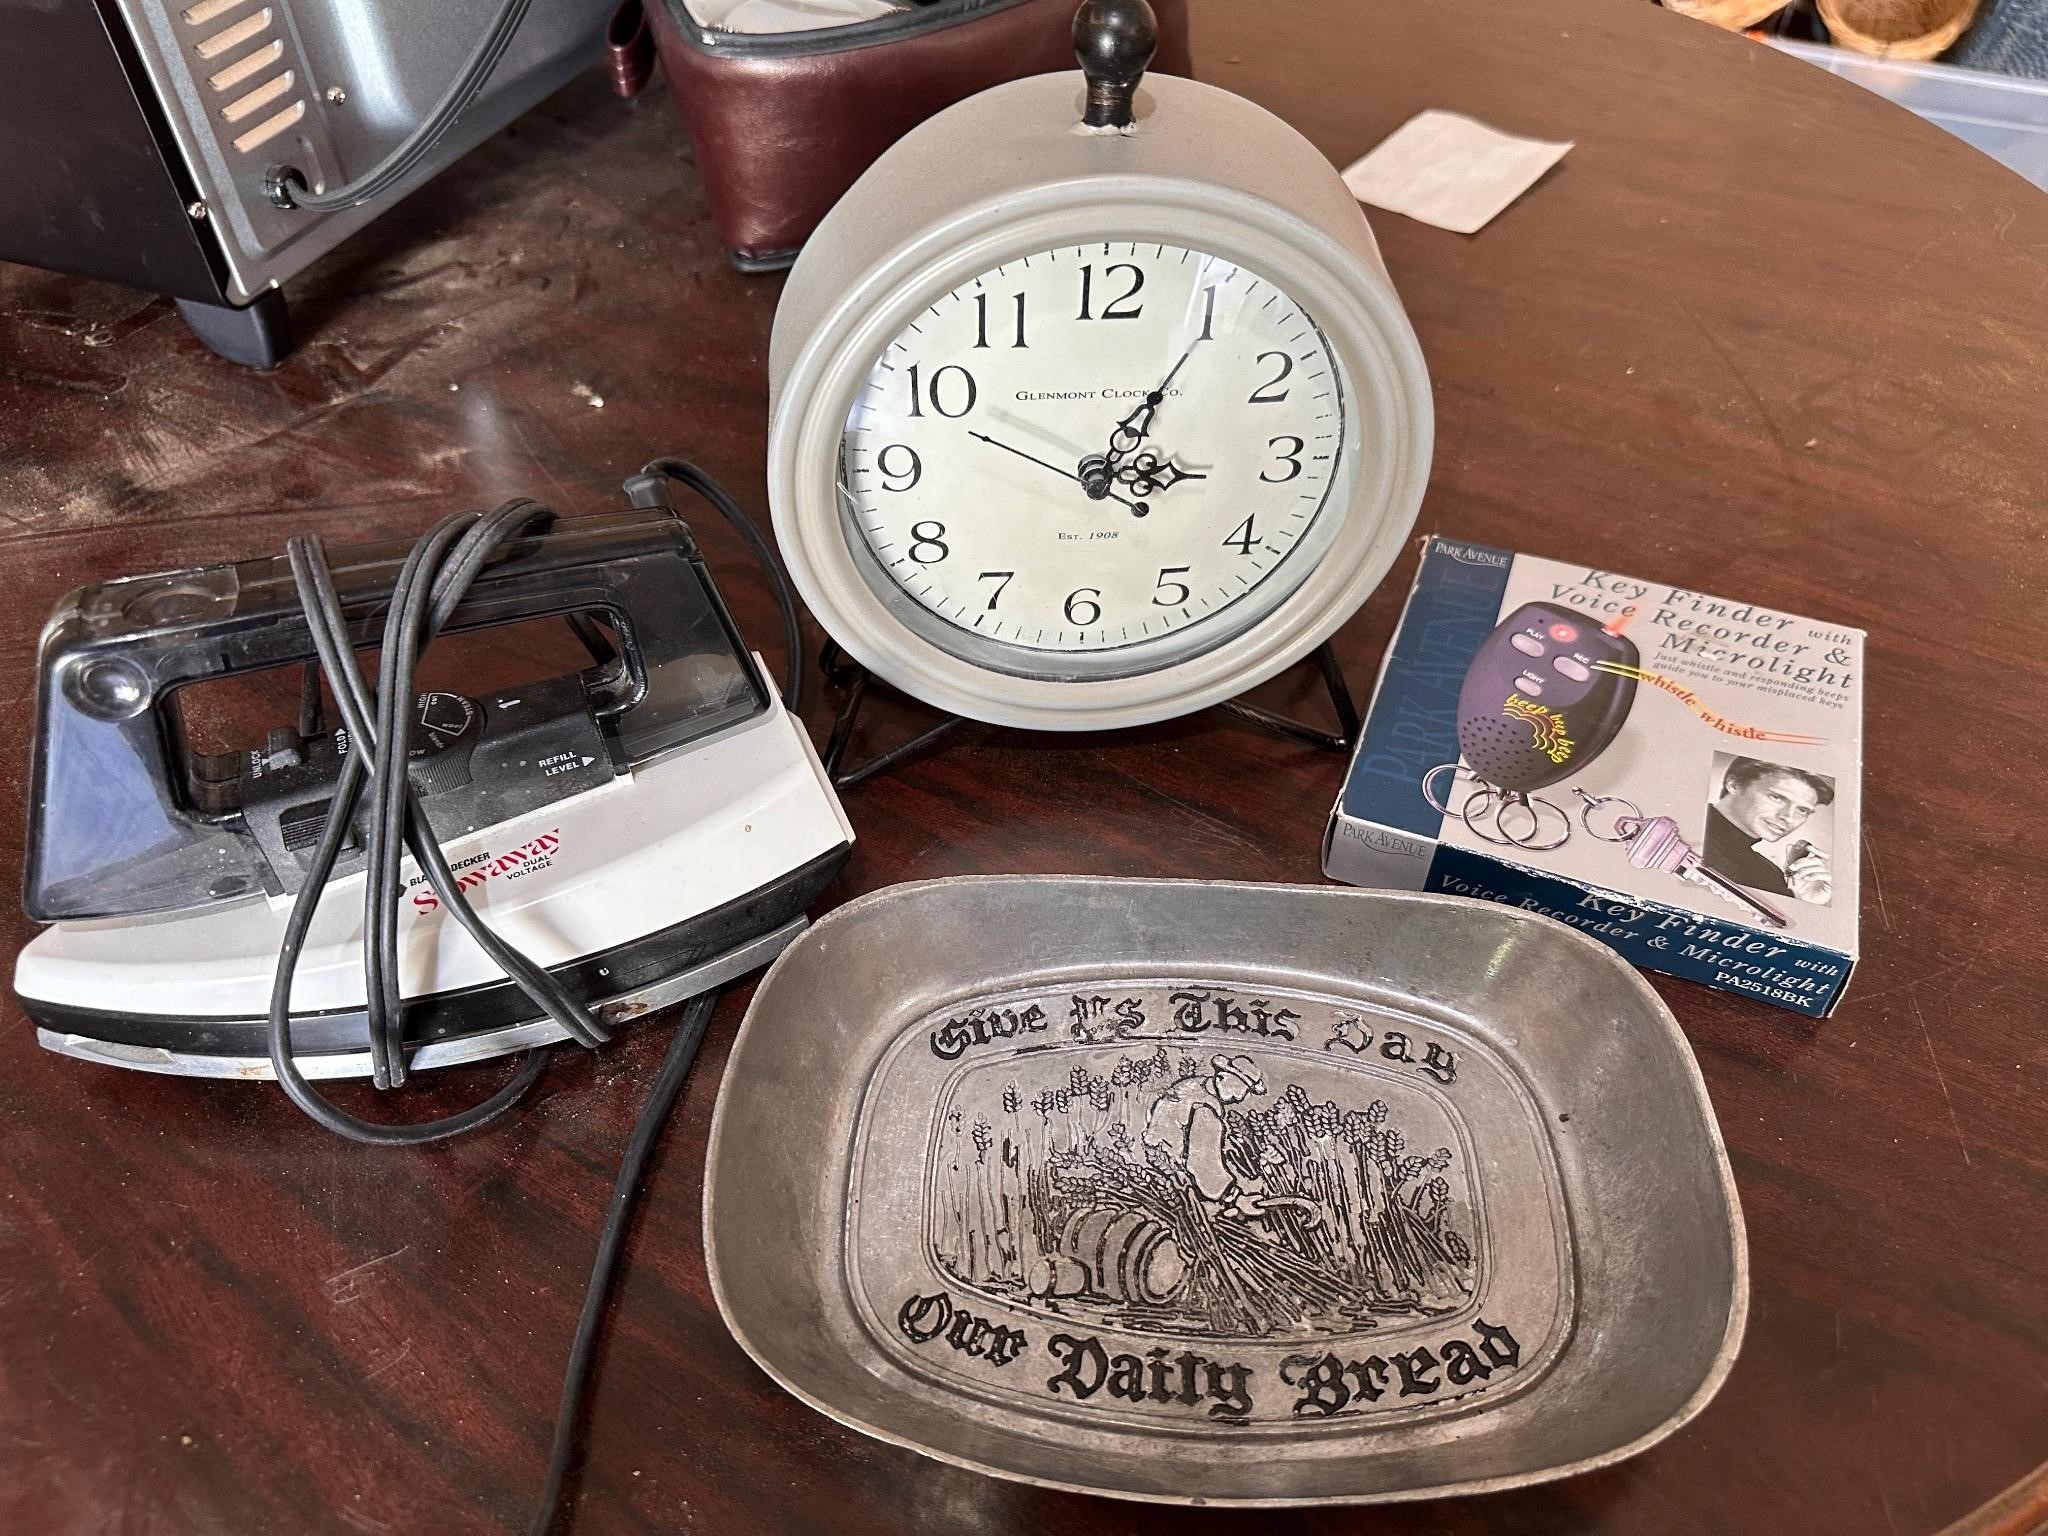 Glenmont Clock, Bread tray, Key finder